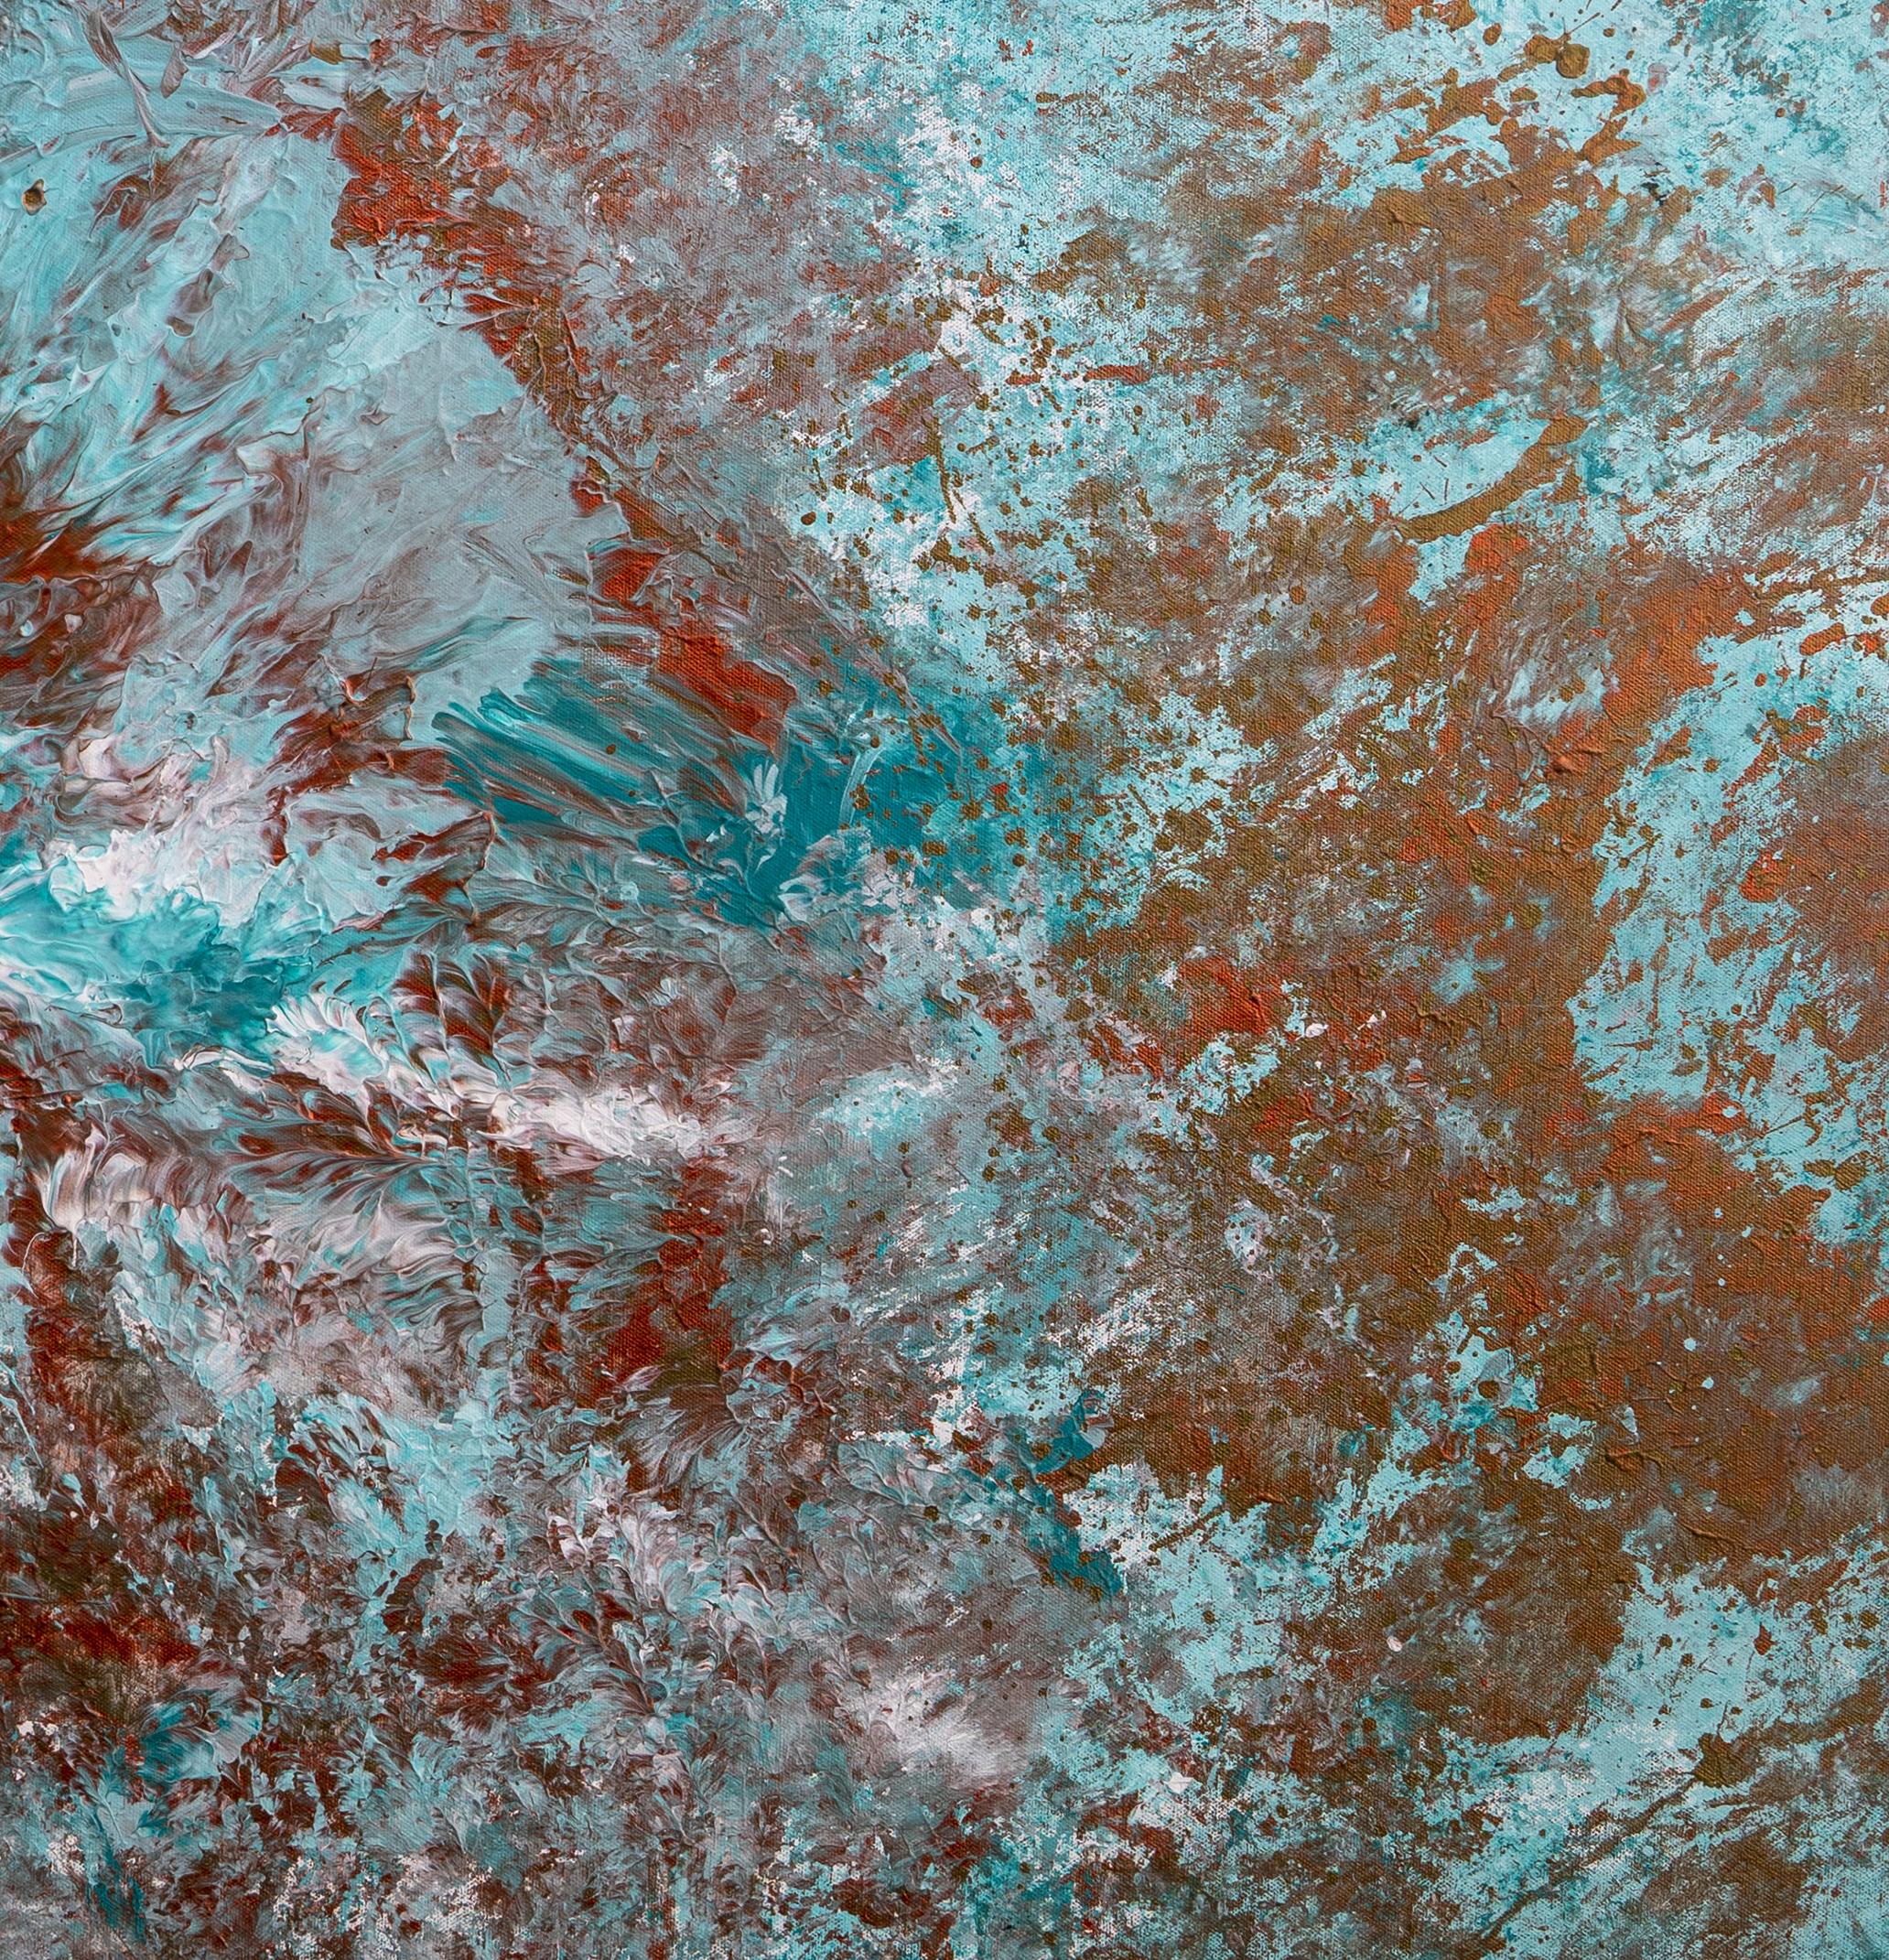 Oceanic Subterfuge by Serj Tankian - Blue Abstract Painting by Serj Tankian 